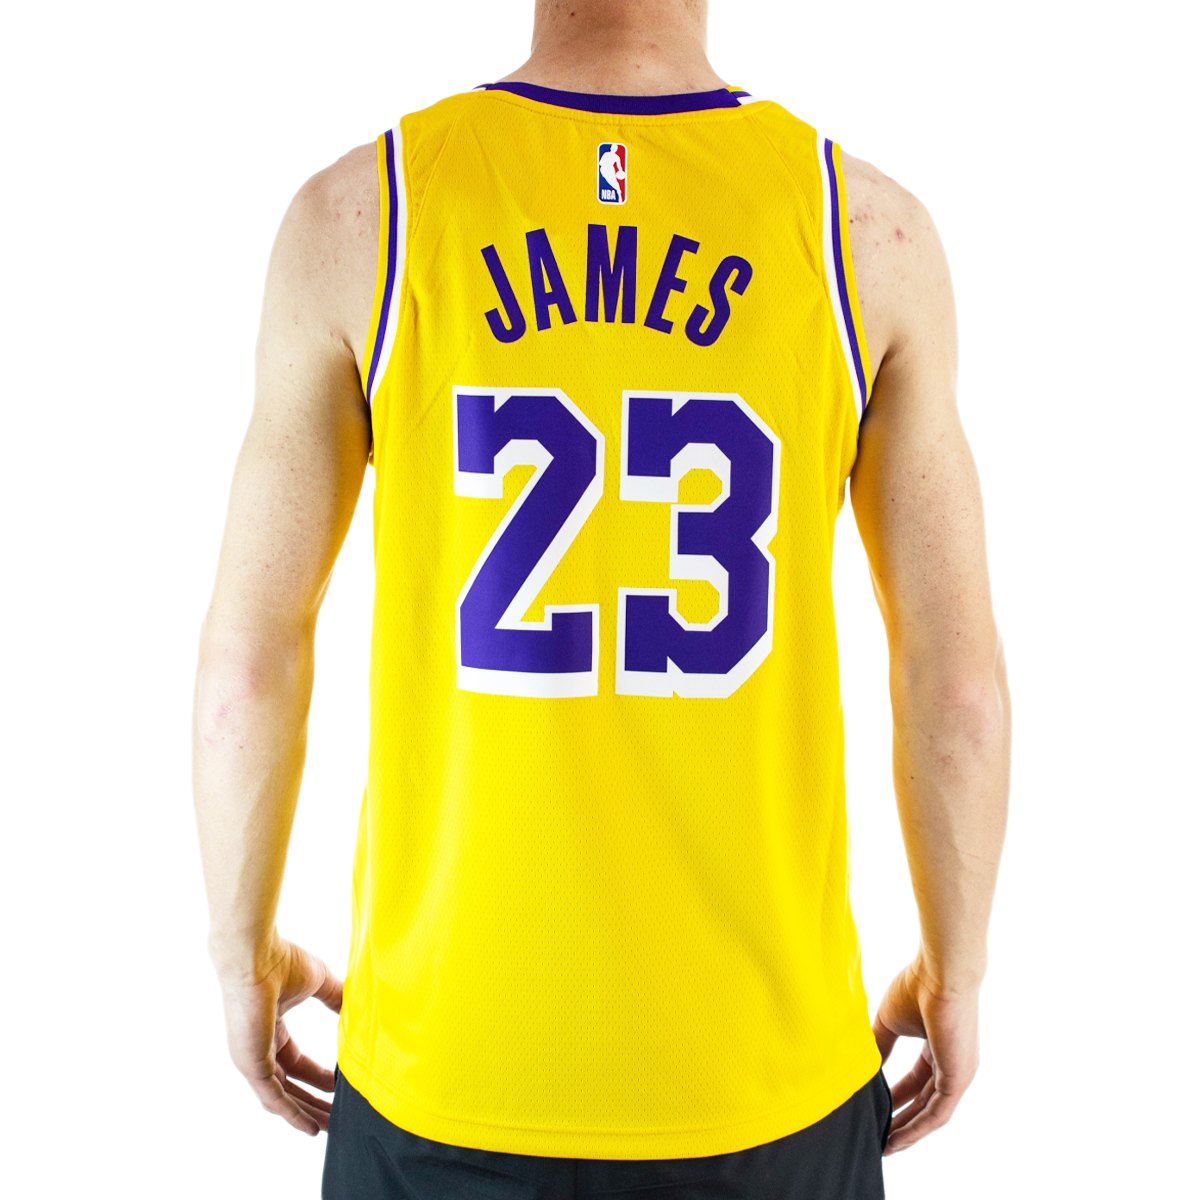 Maillot NBA Enfant LeBron James Los Angeles Lakers Nike Icon Edition 23